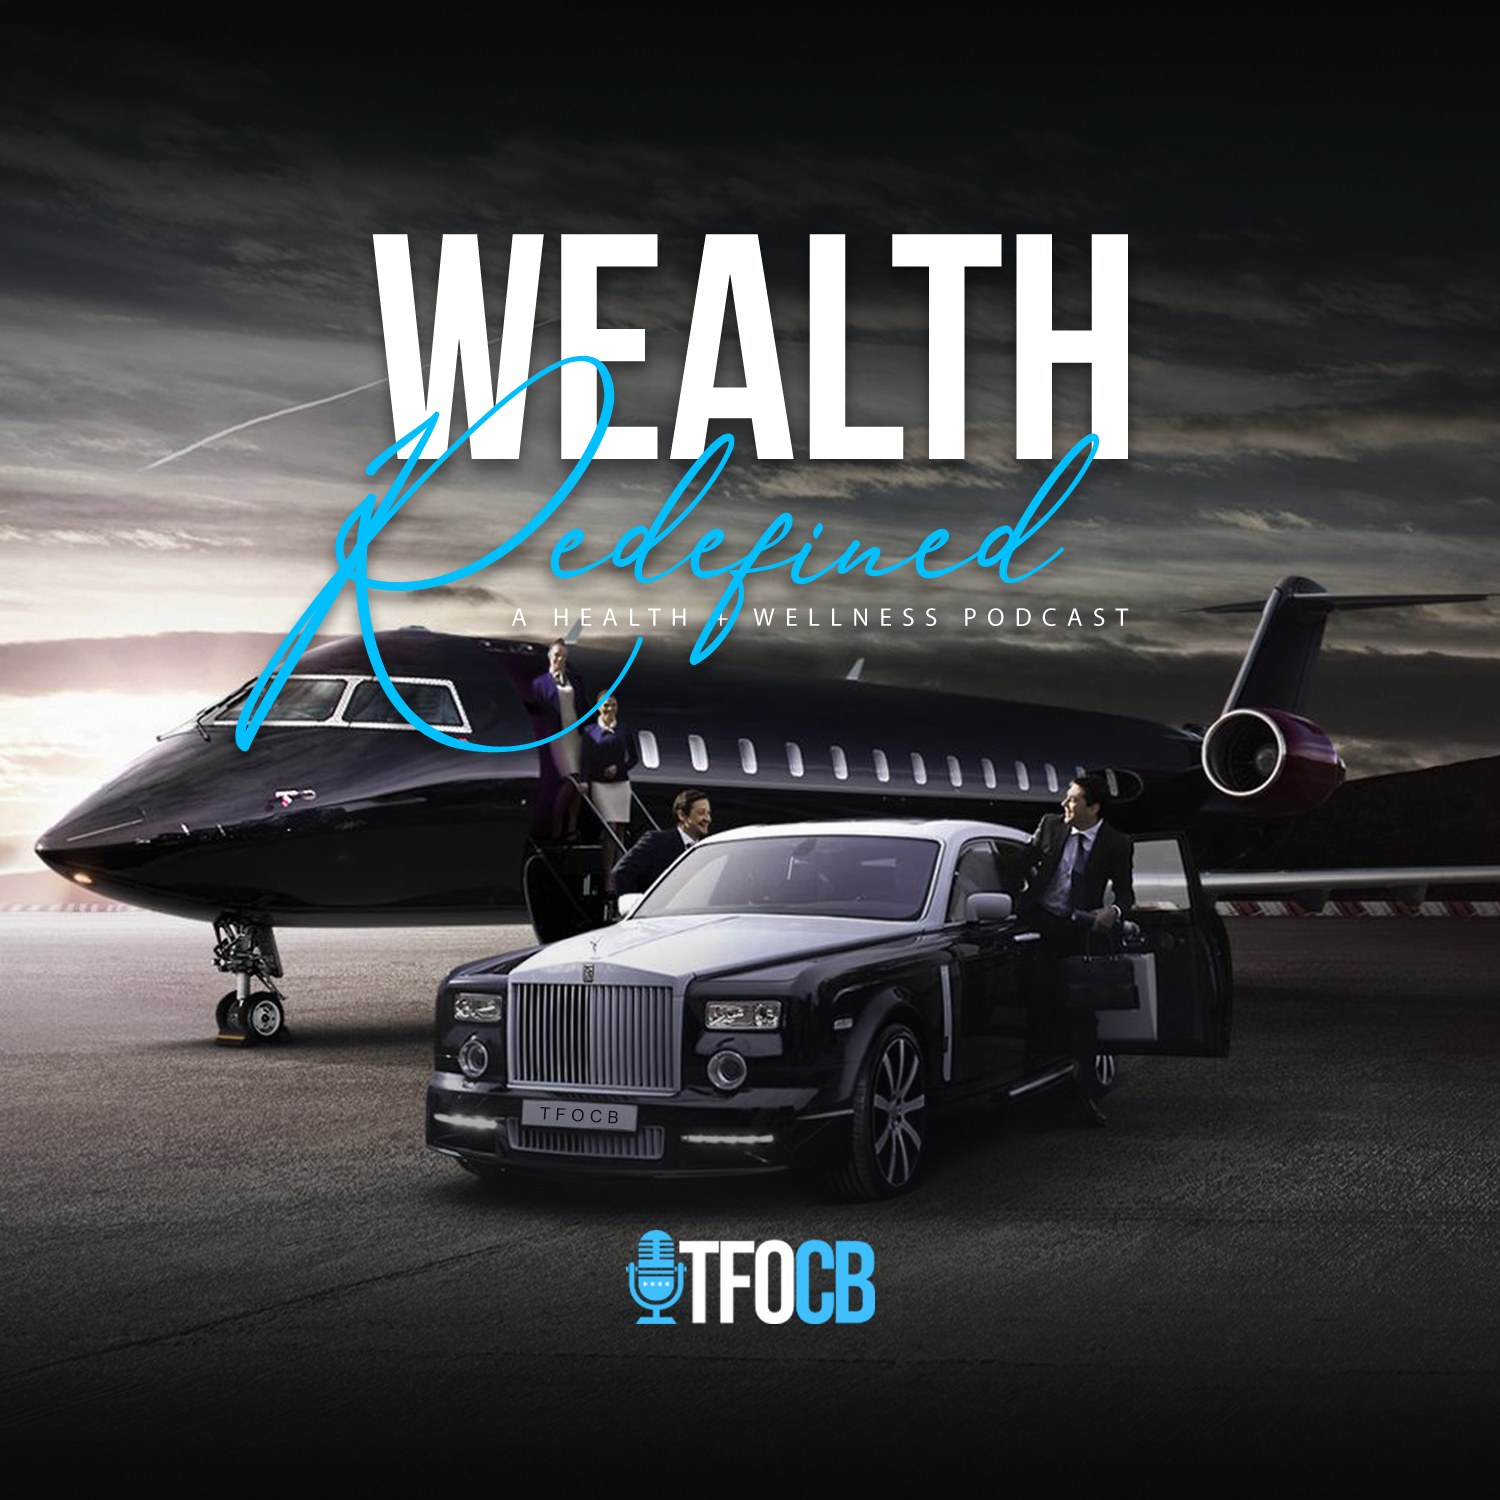 Artwork for podcast Wealth Redefined